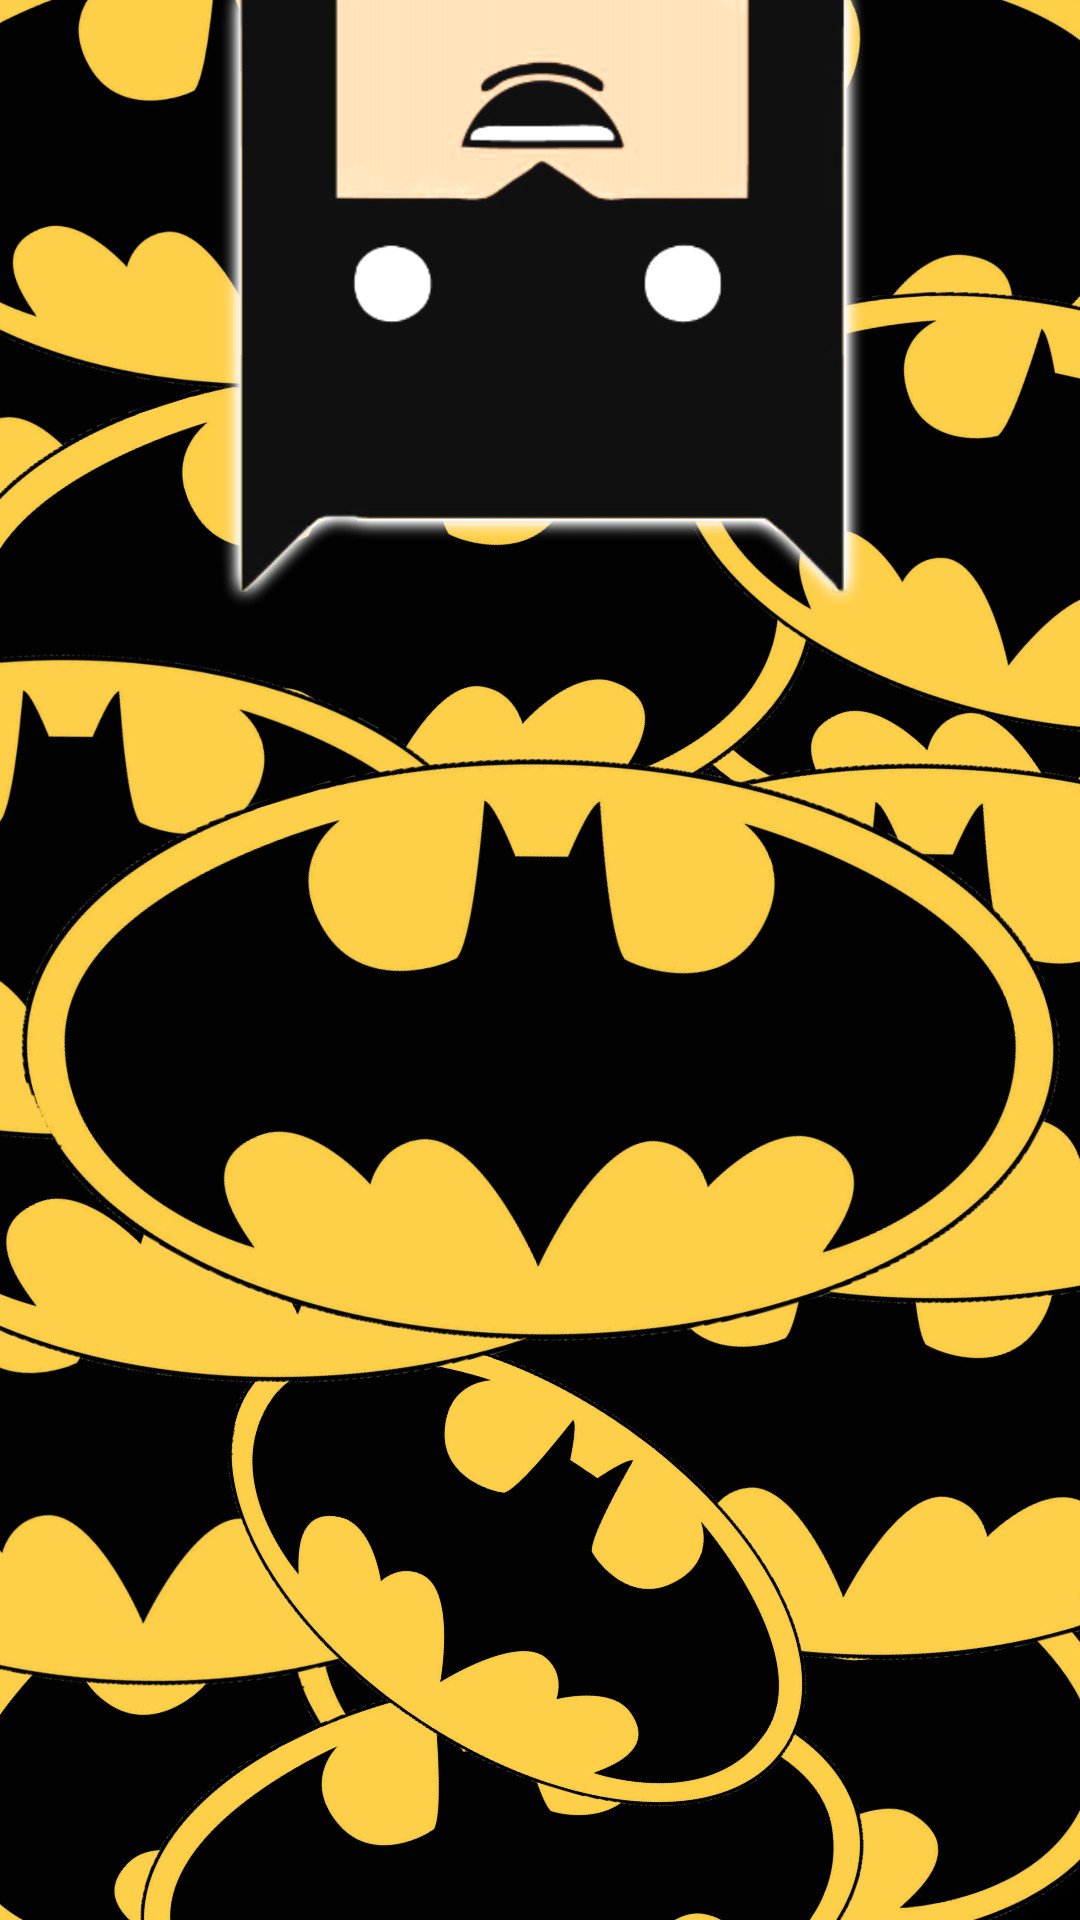 50+] Batman Lock Screen Wallpaper - WallpaperSafari